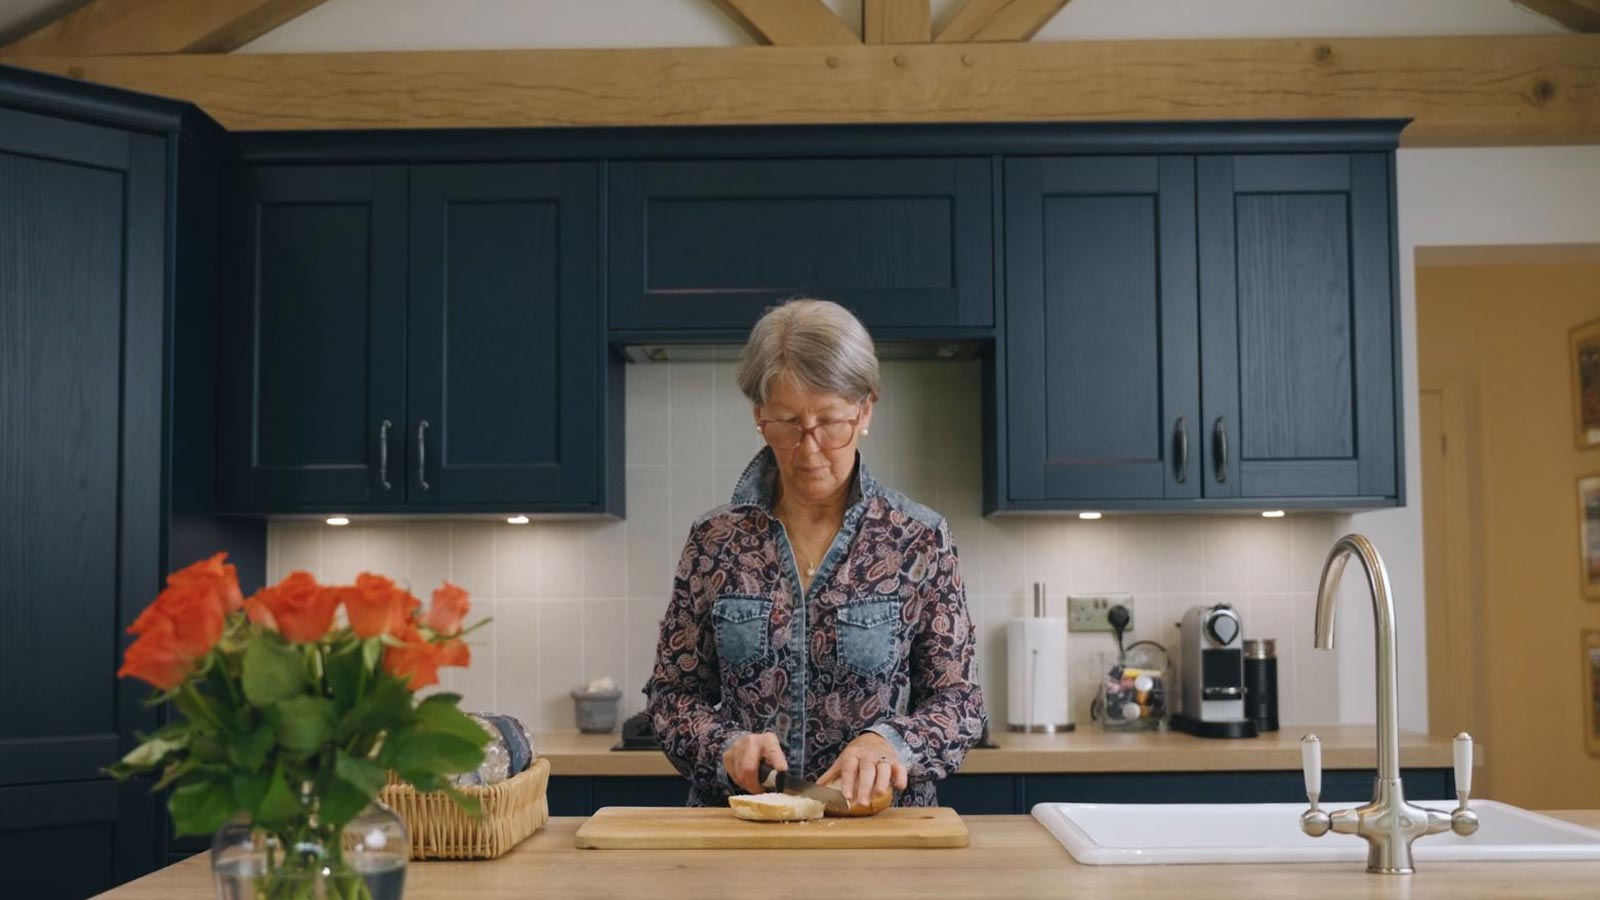 Edwina in her dark blue classic kitchen cutting bread